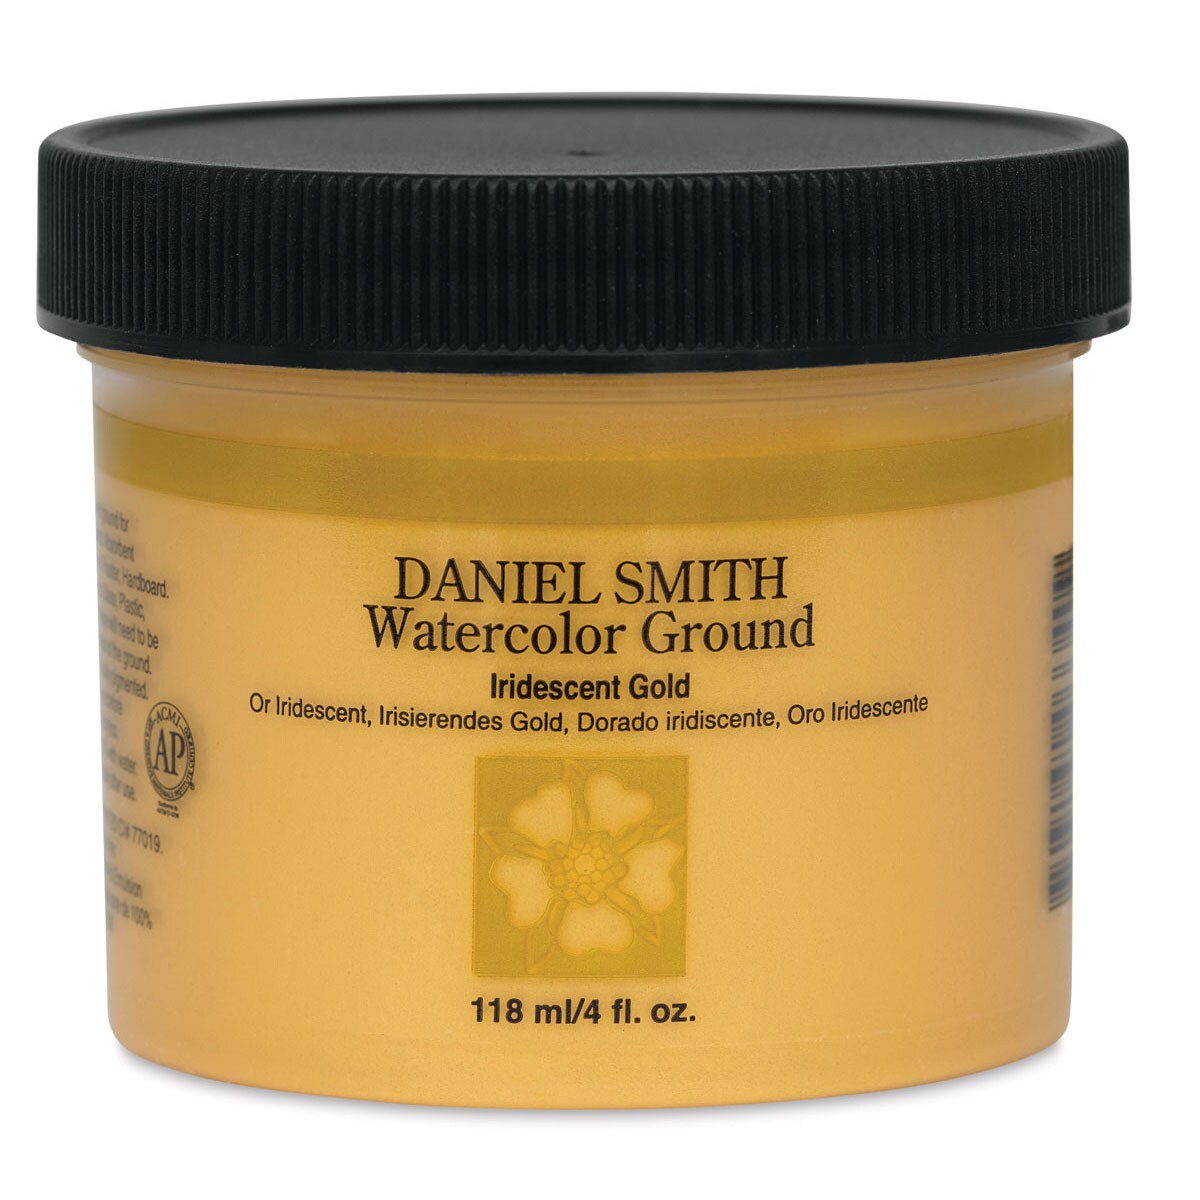 Daniel Smith Watercolor Ground - Iridescent Gold, 4 oz